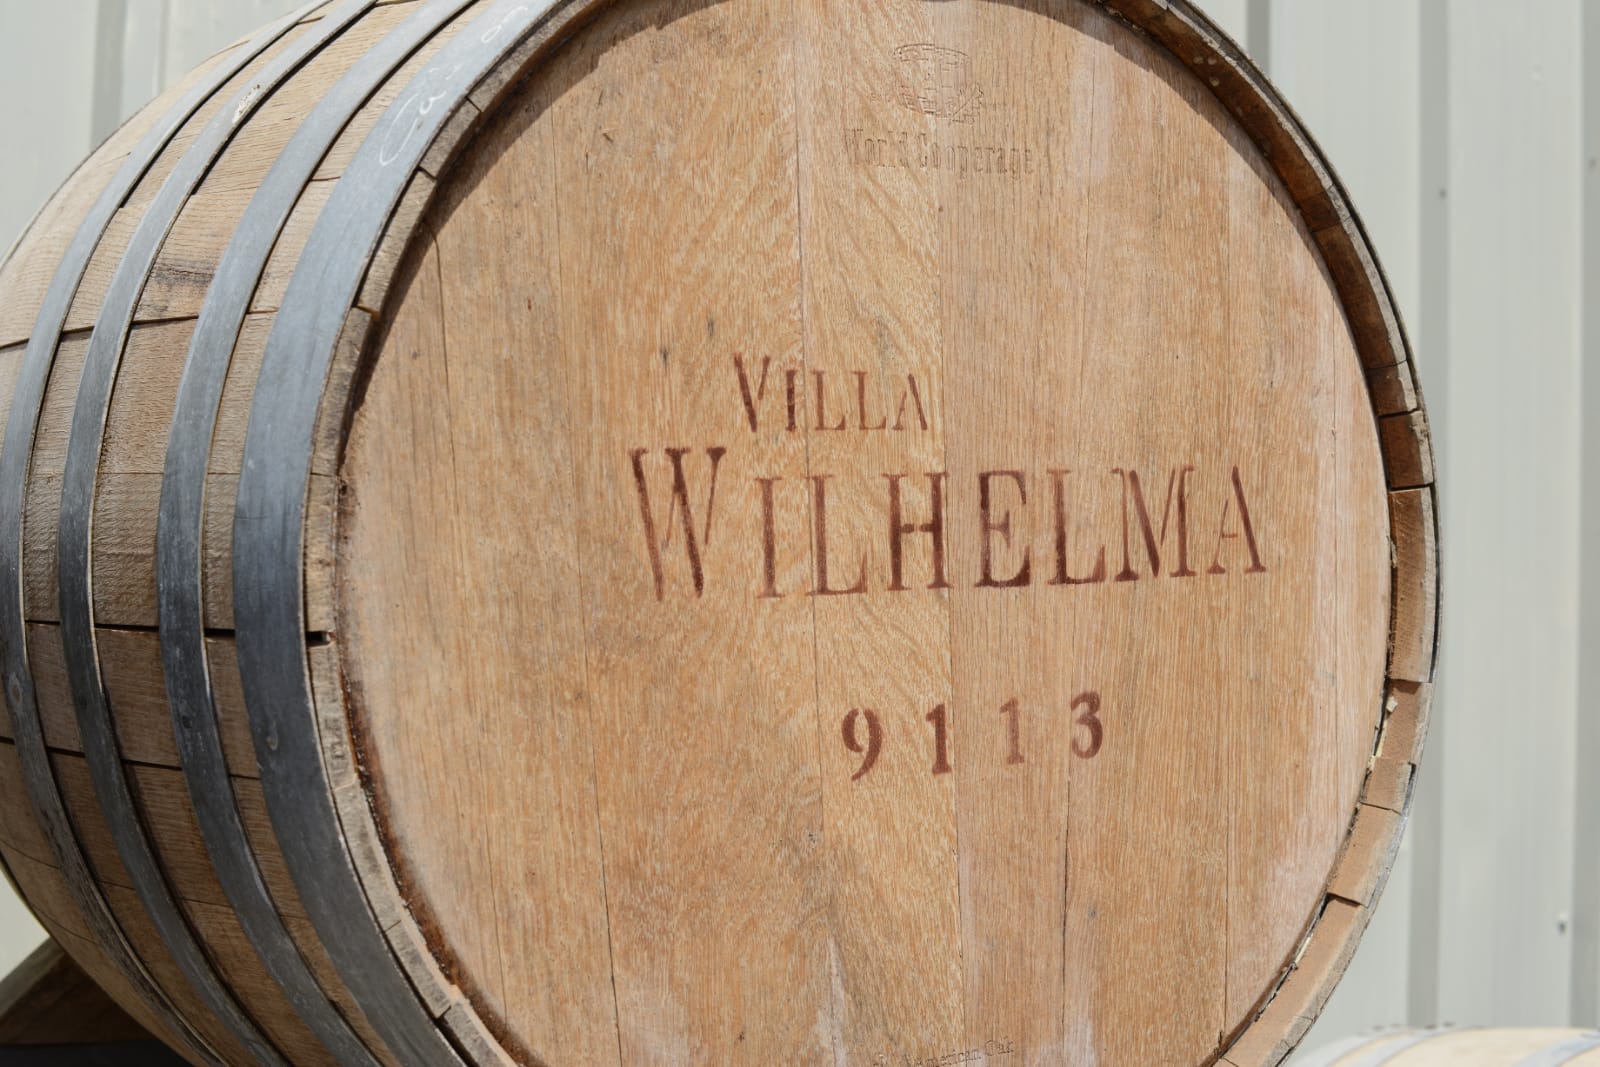 Wilhelma Bney Atarot Templers village winery barrel